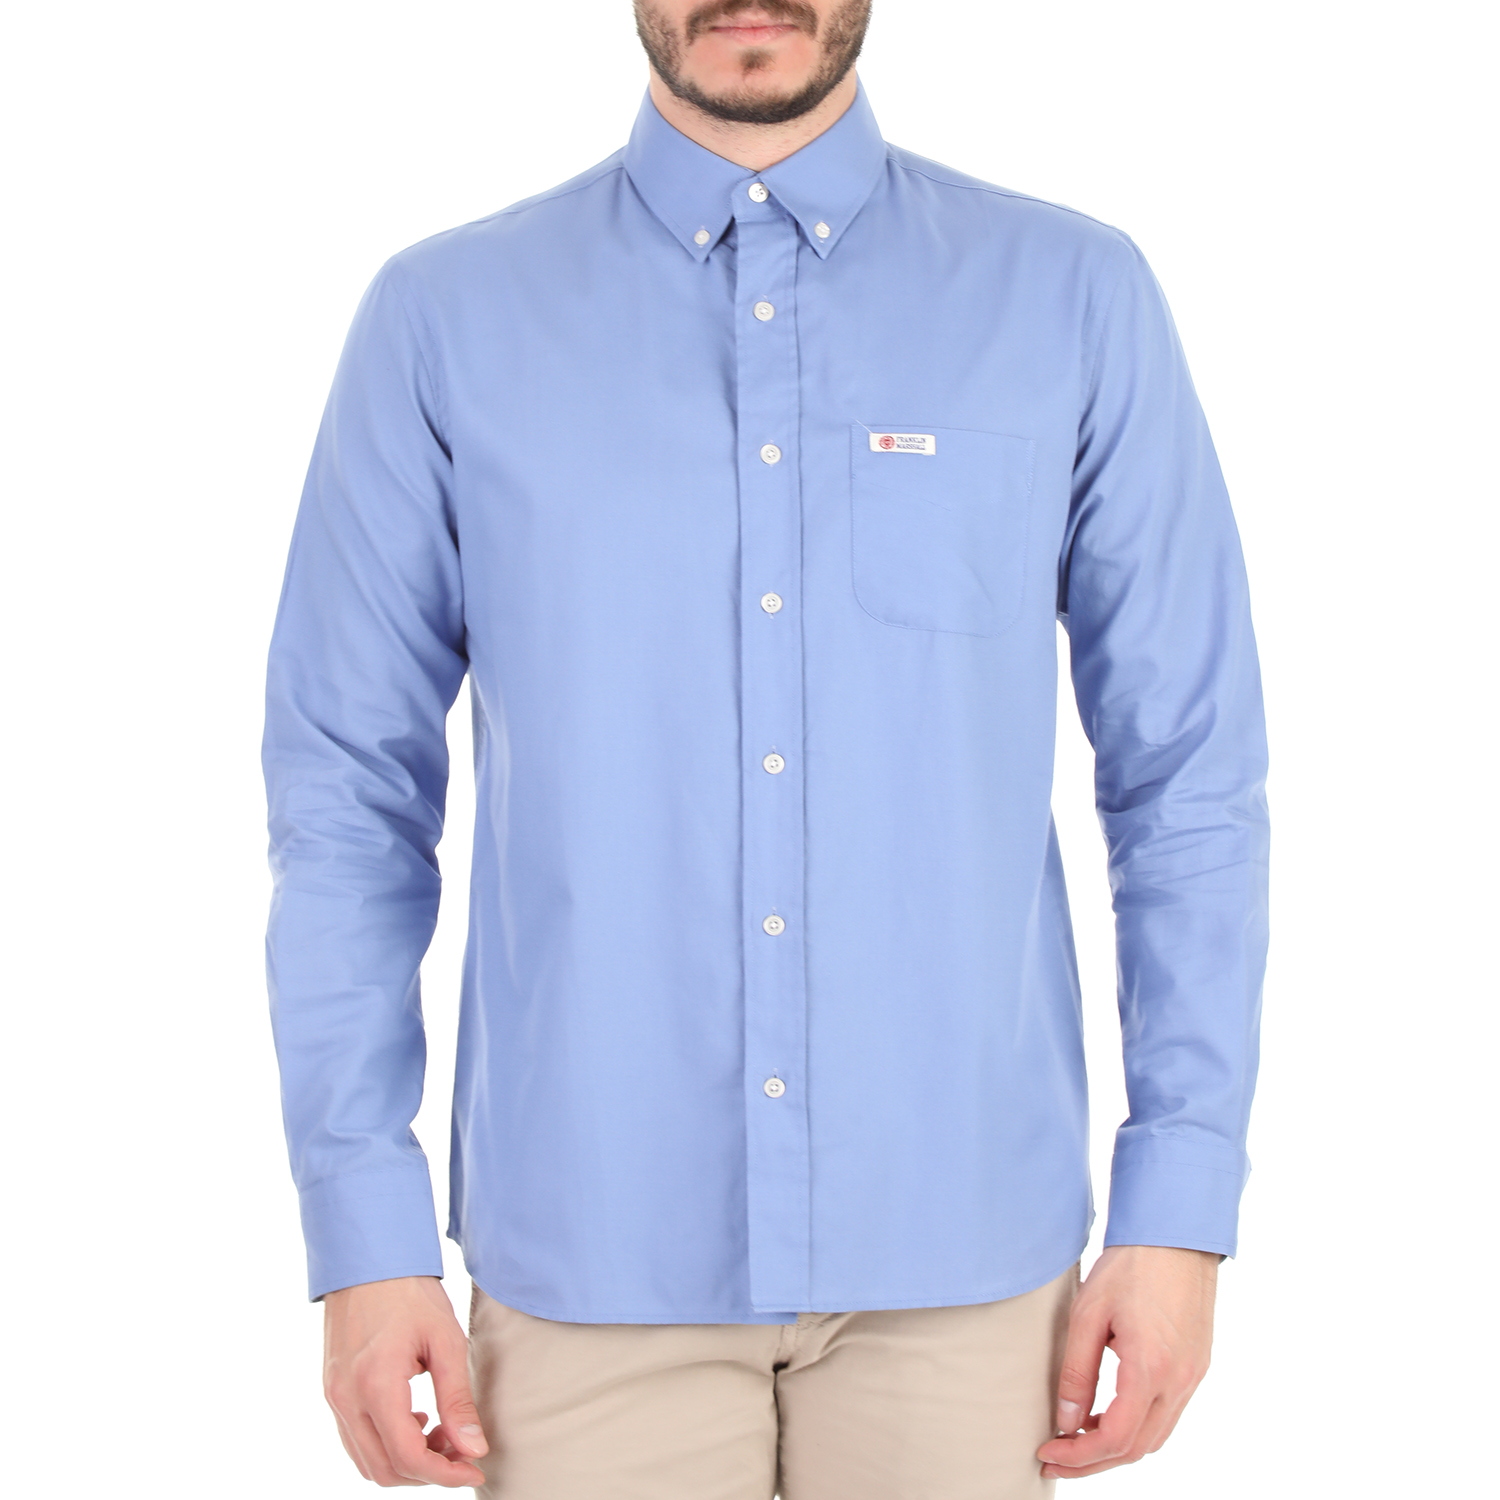 FRANKLIN & MARSHALL FRANKLIN & MARSHALL - Ανδρικό πουκάμισο FRANKLIN & MARSHALL γαλάζιο